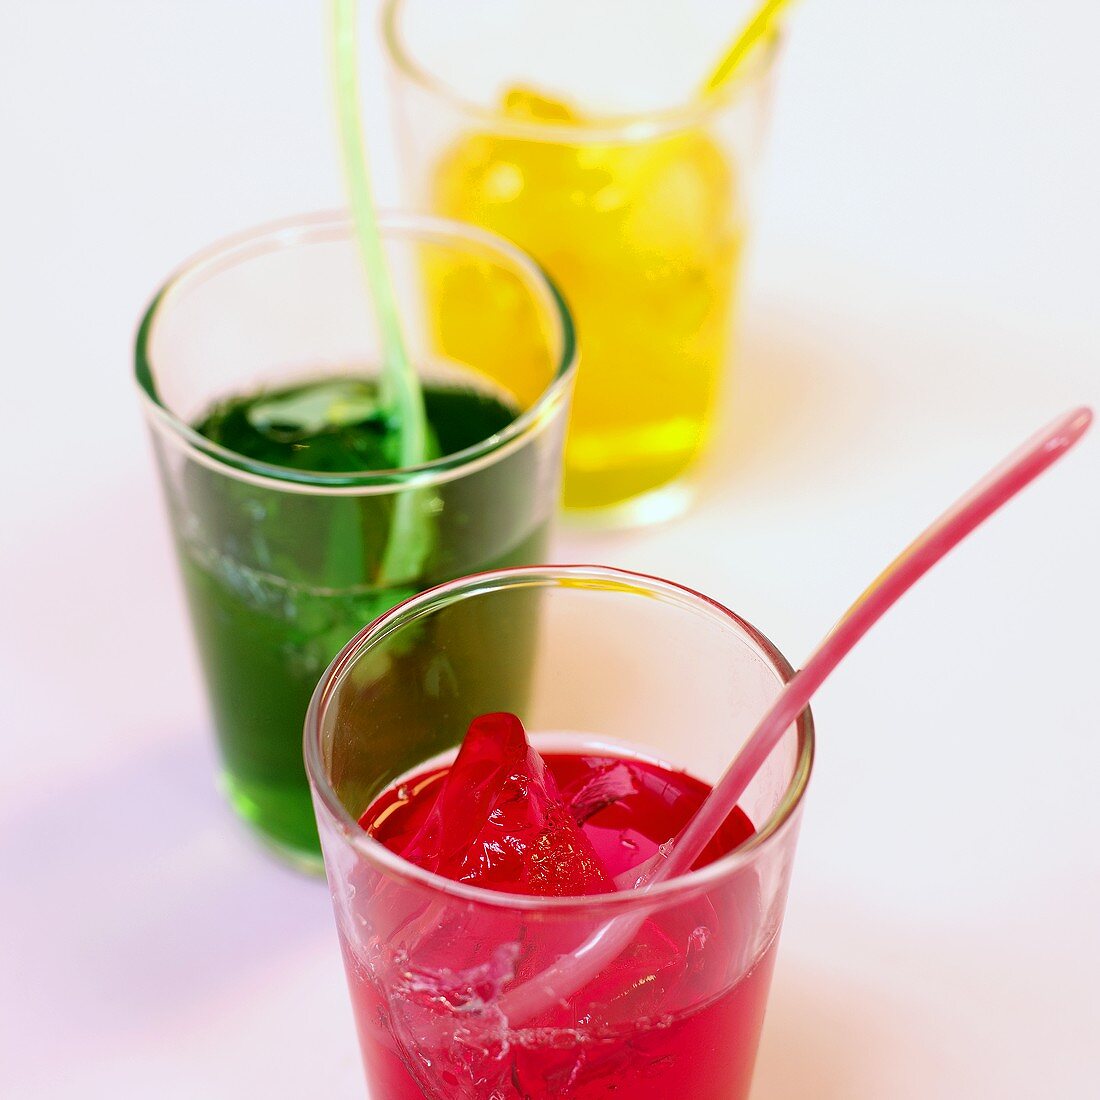 Bunte Jelly-Shots (Agar-Agar, Fruchtsirup und Wodka)